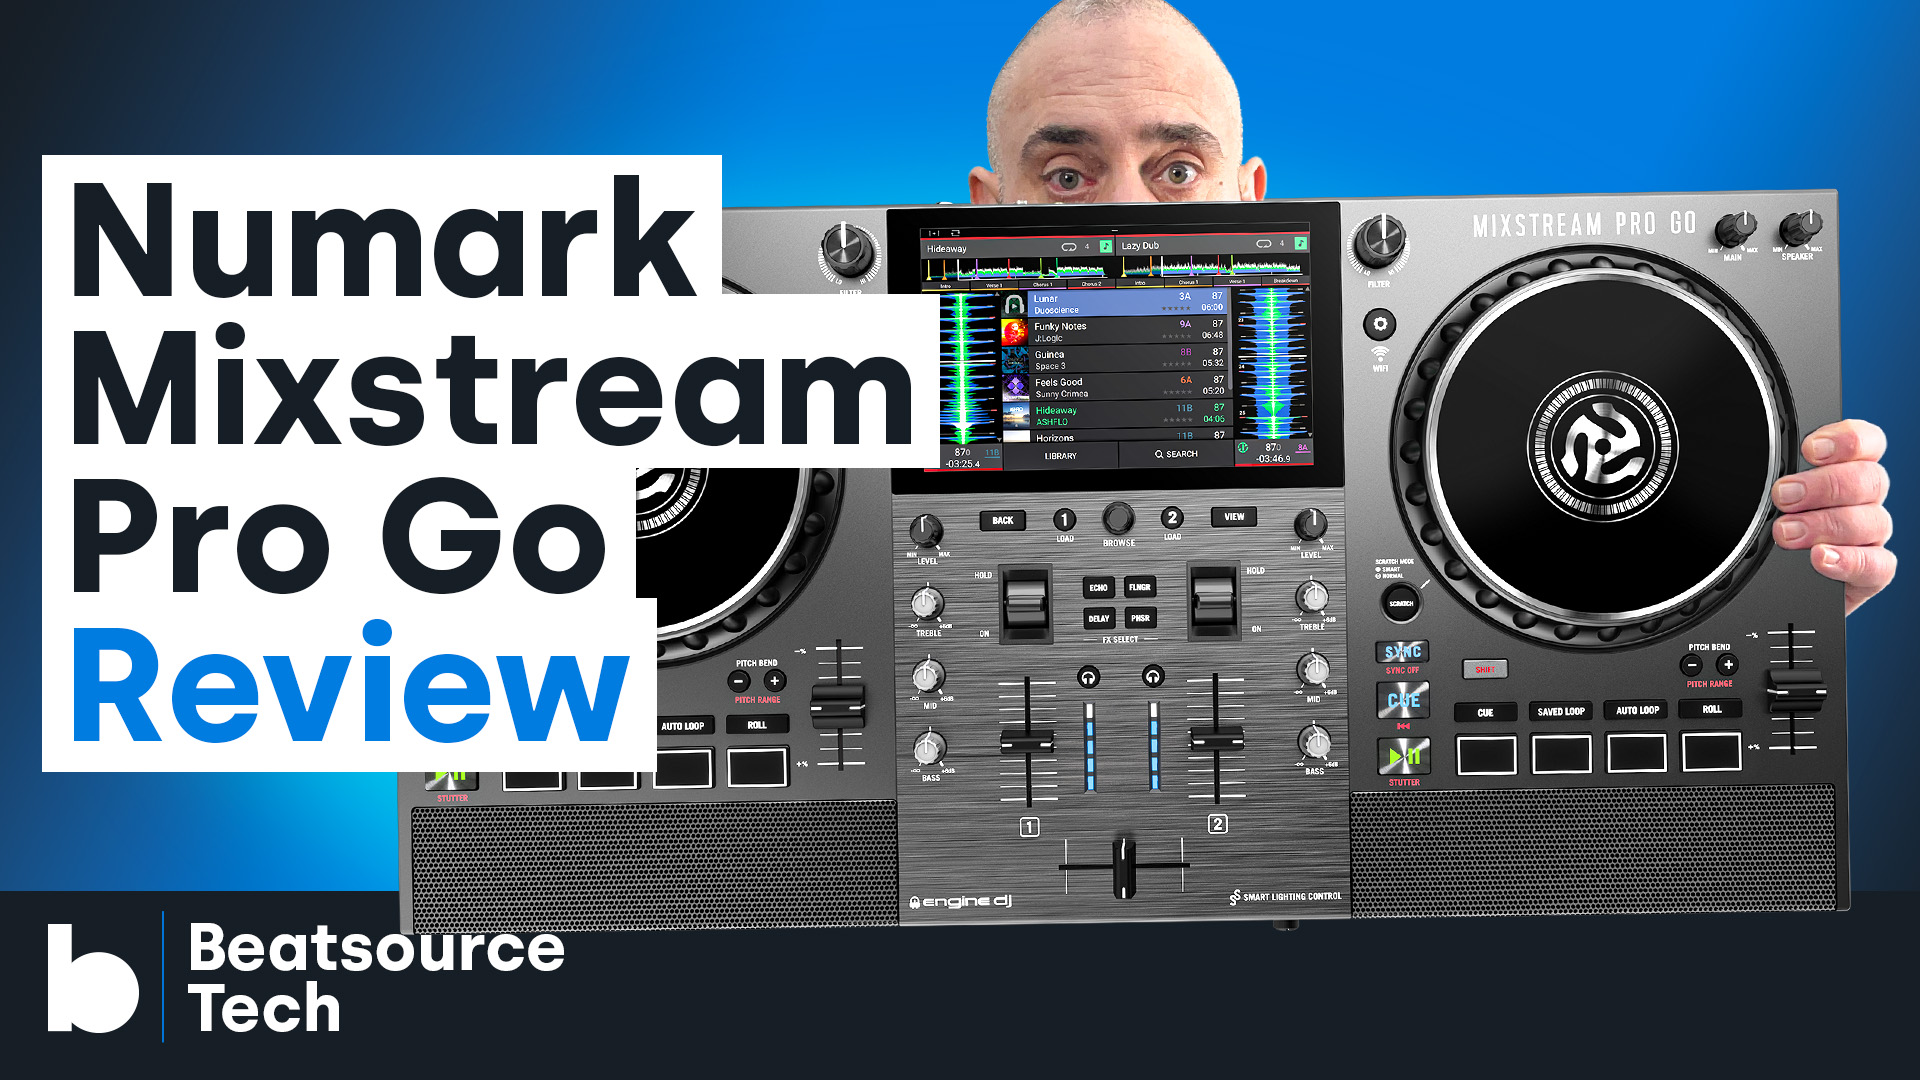 Numark Mixstream Pro Go Review: Beatsource Tech